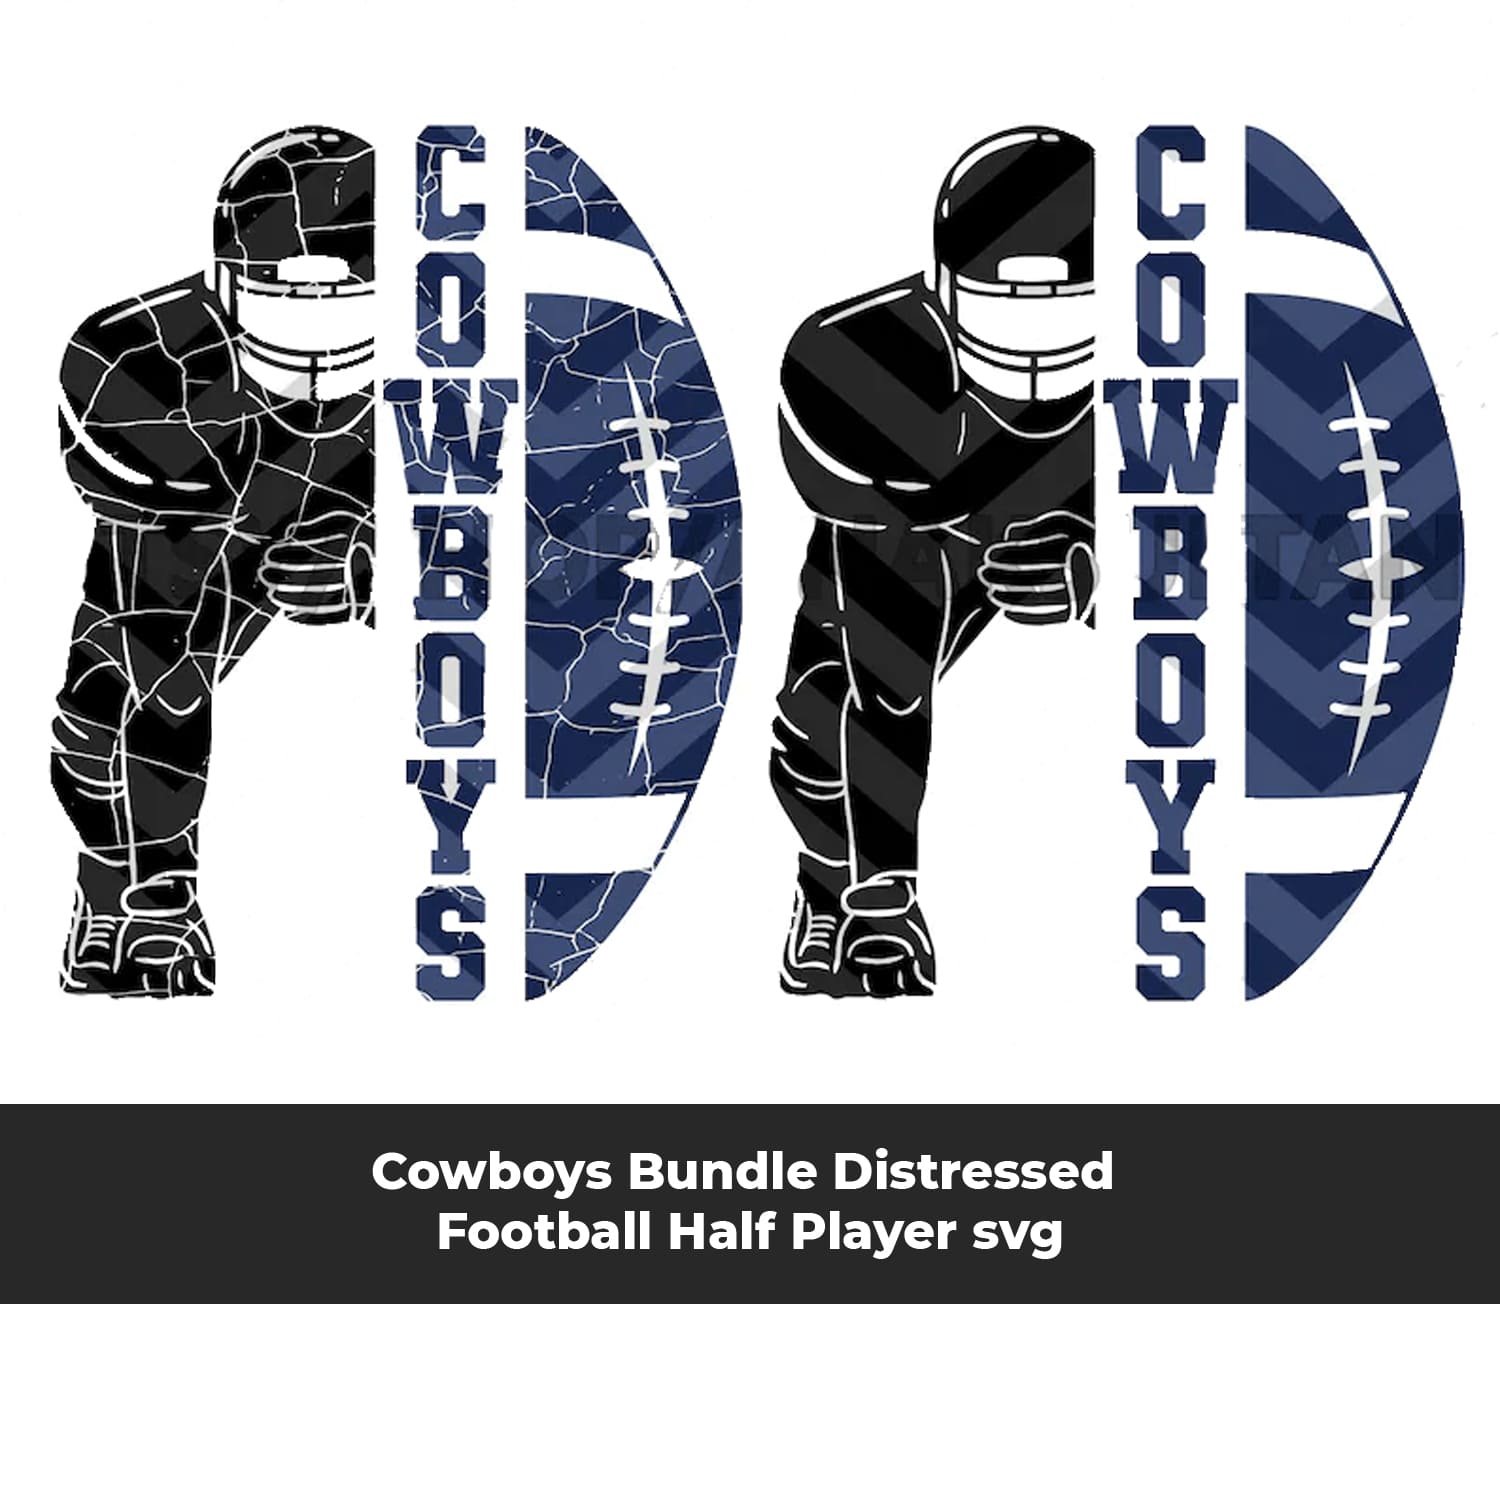 Cowboys Bundle Distressed Football Half Player svg cover.